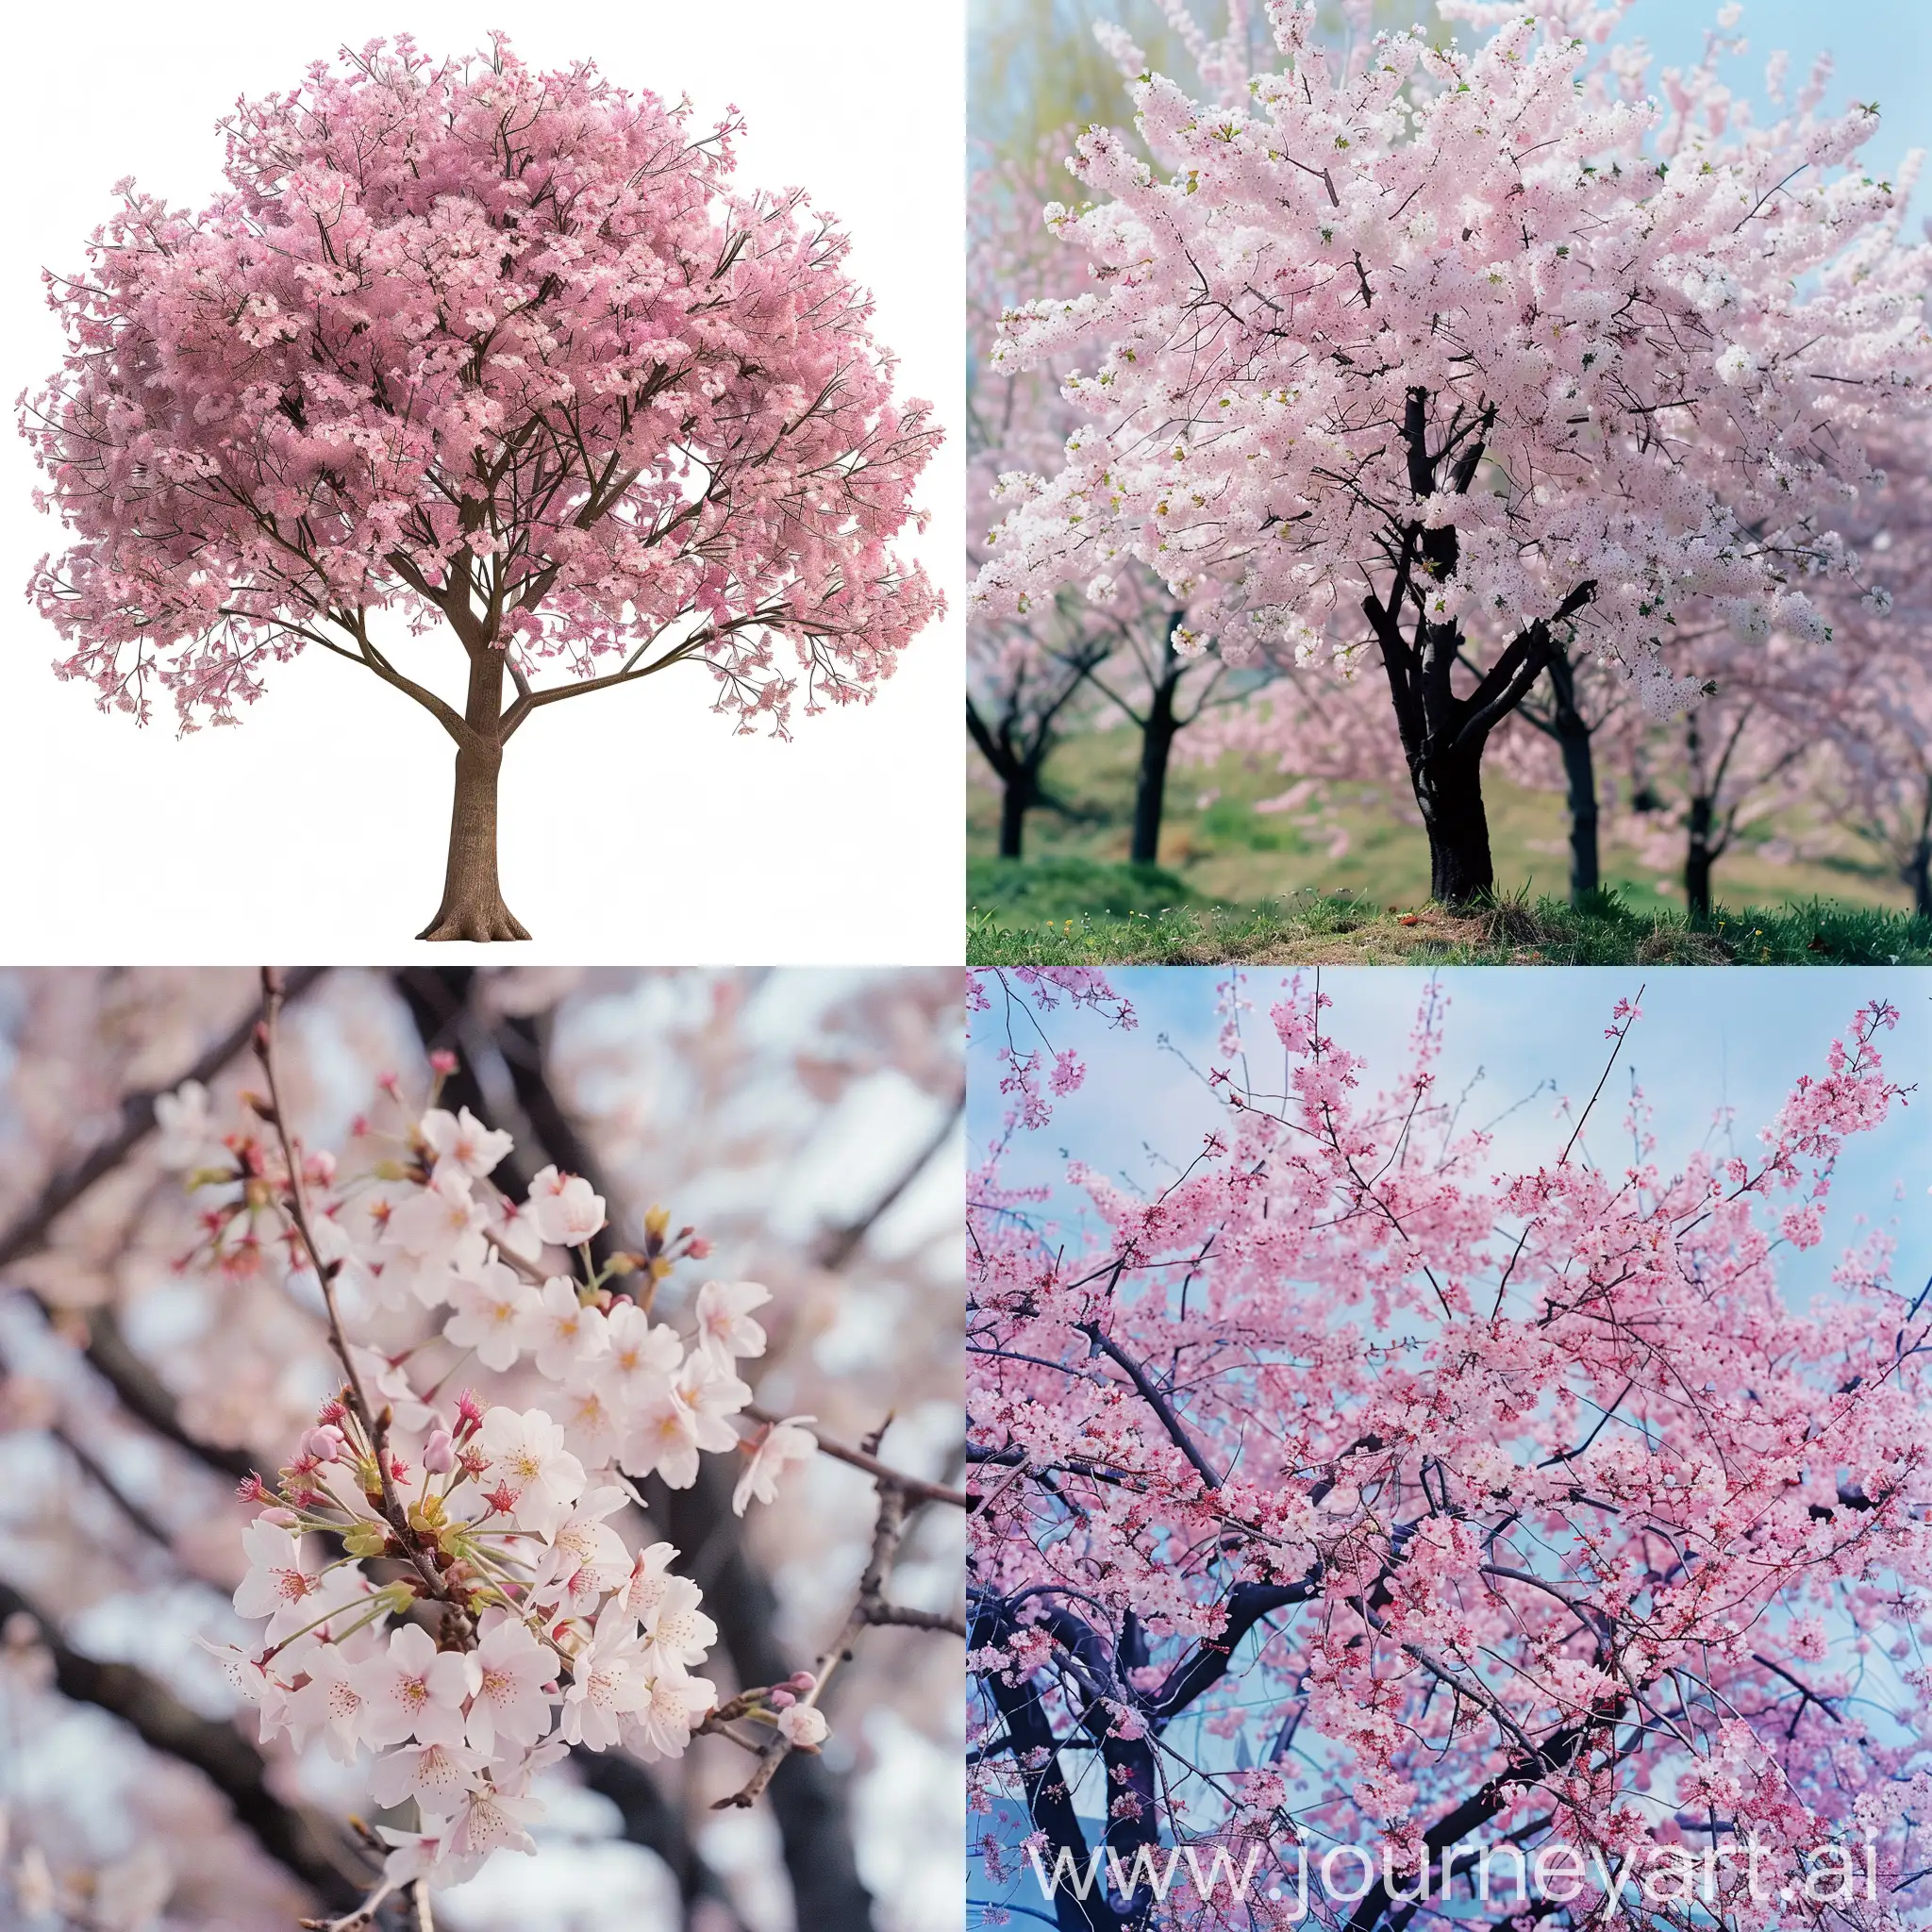 Vibrant-Cherry-Blossom-Tree-in-Full-Bloom